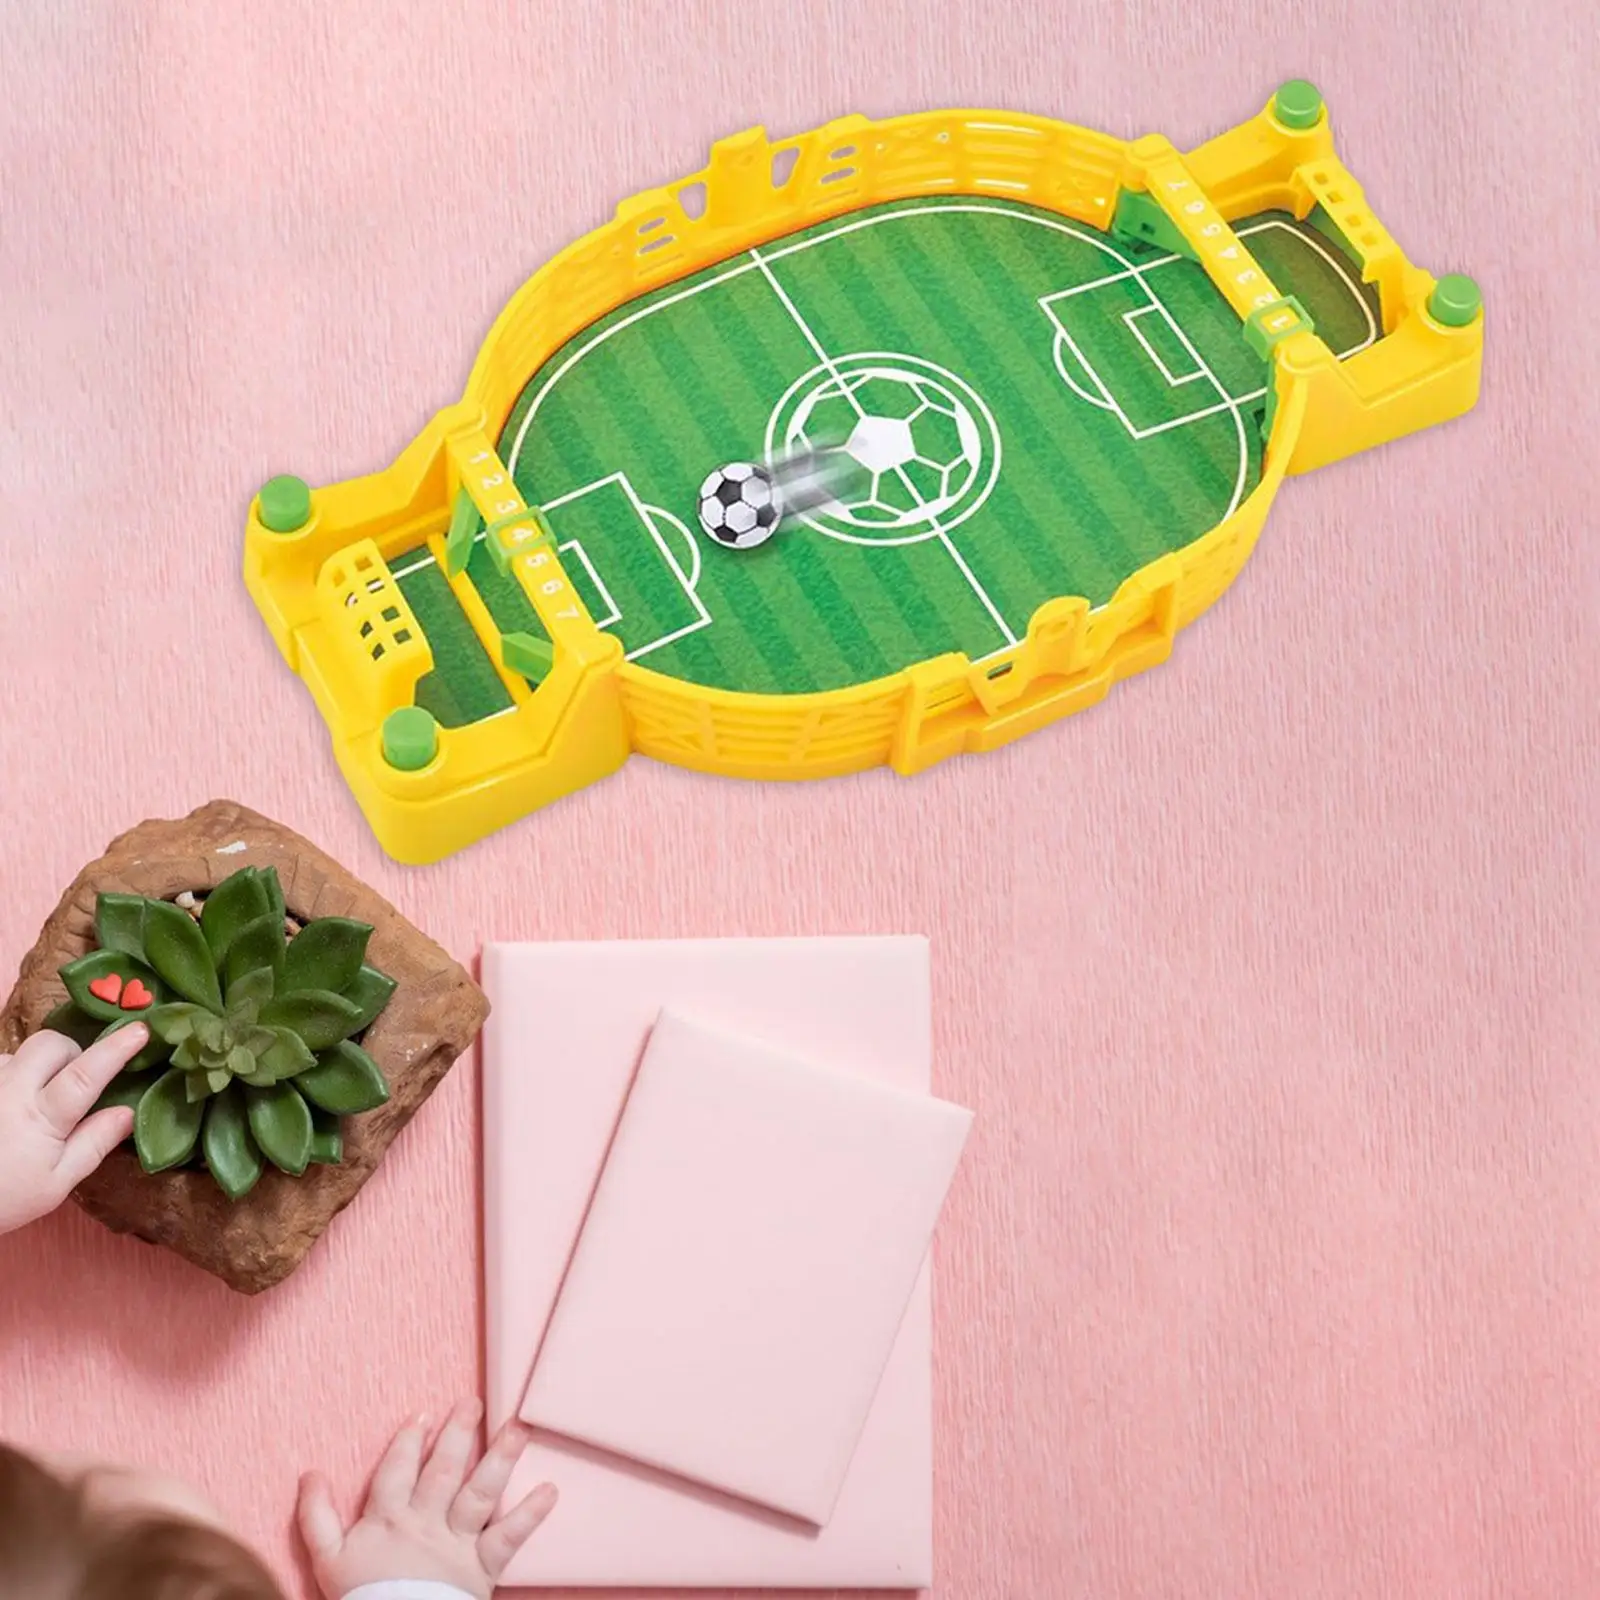 Table Soccer Game Parent-Child Interactive Toys Desktop Soccer Board Games for